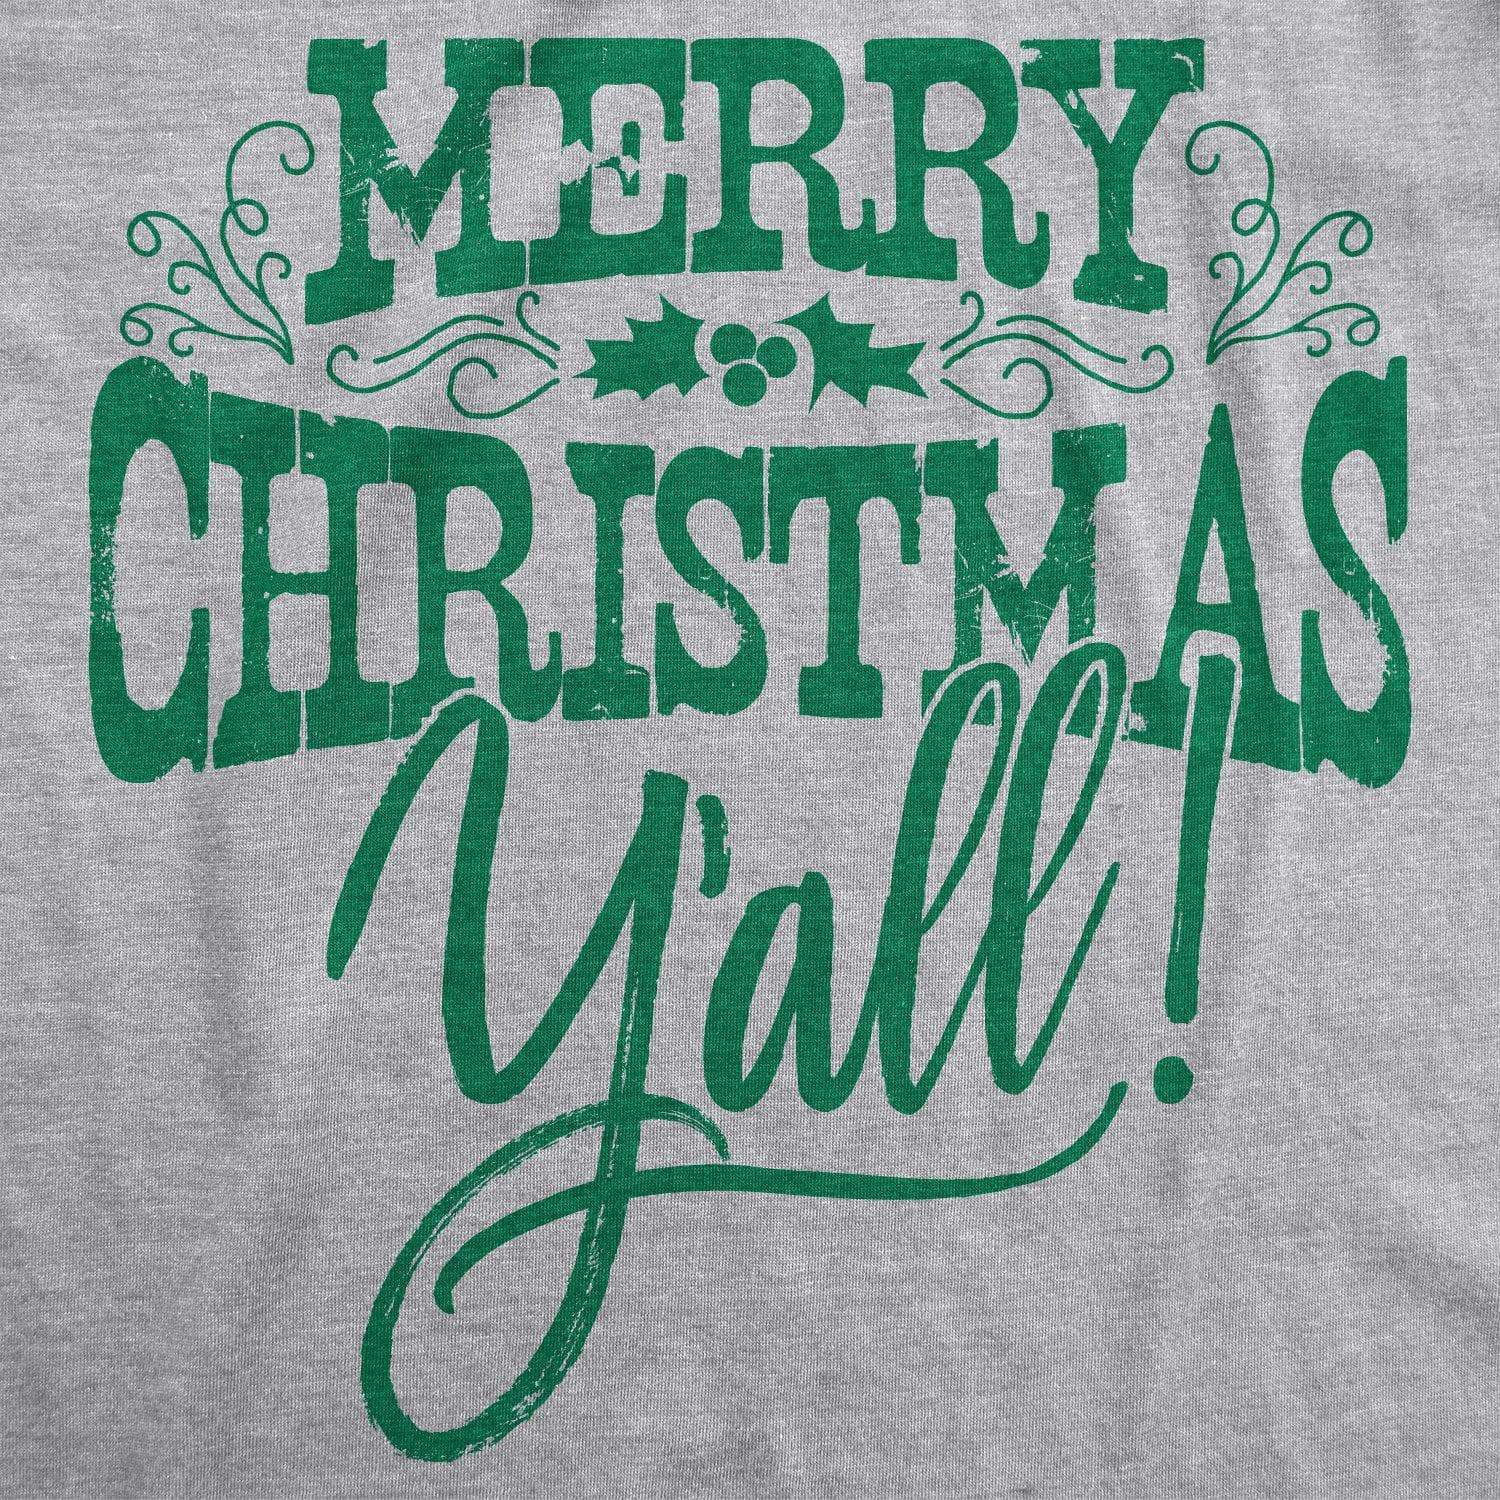 Merry Christmas Y'all Men's Tshirt - Crazy Dog T-Shirts